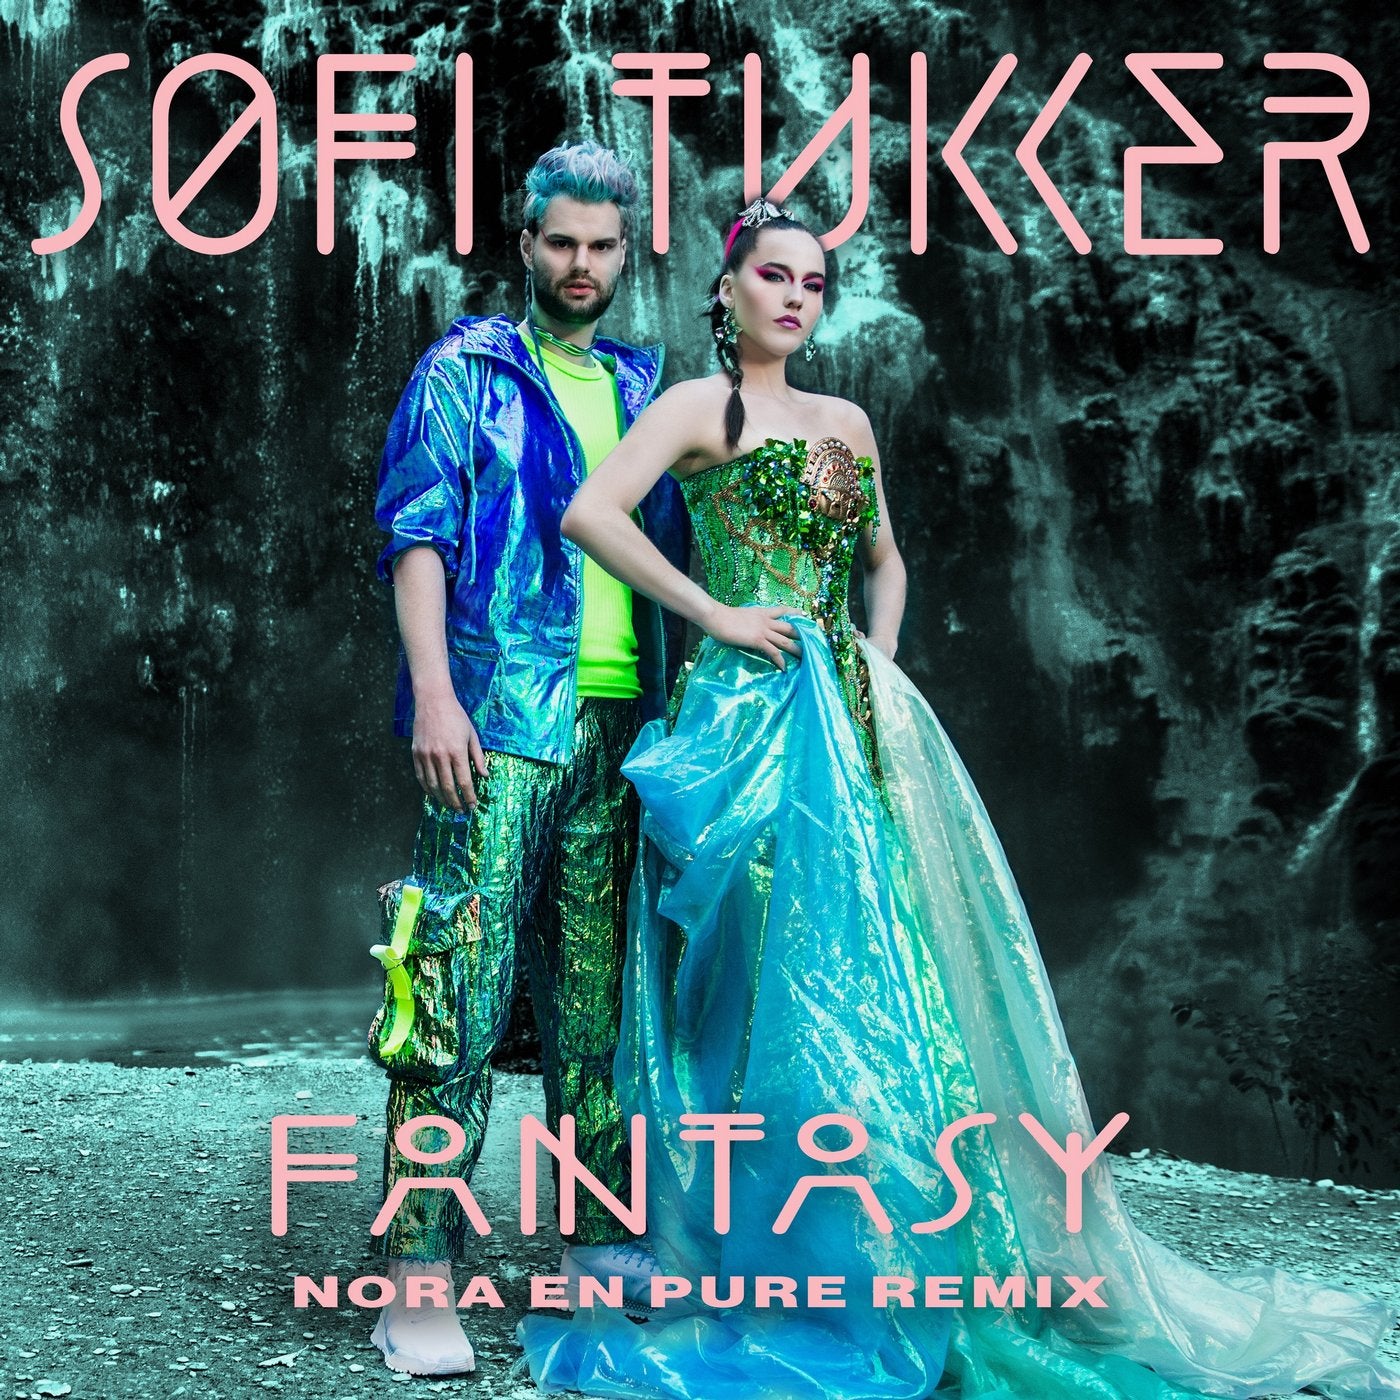 Fantasy - Nora En Pure Remix